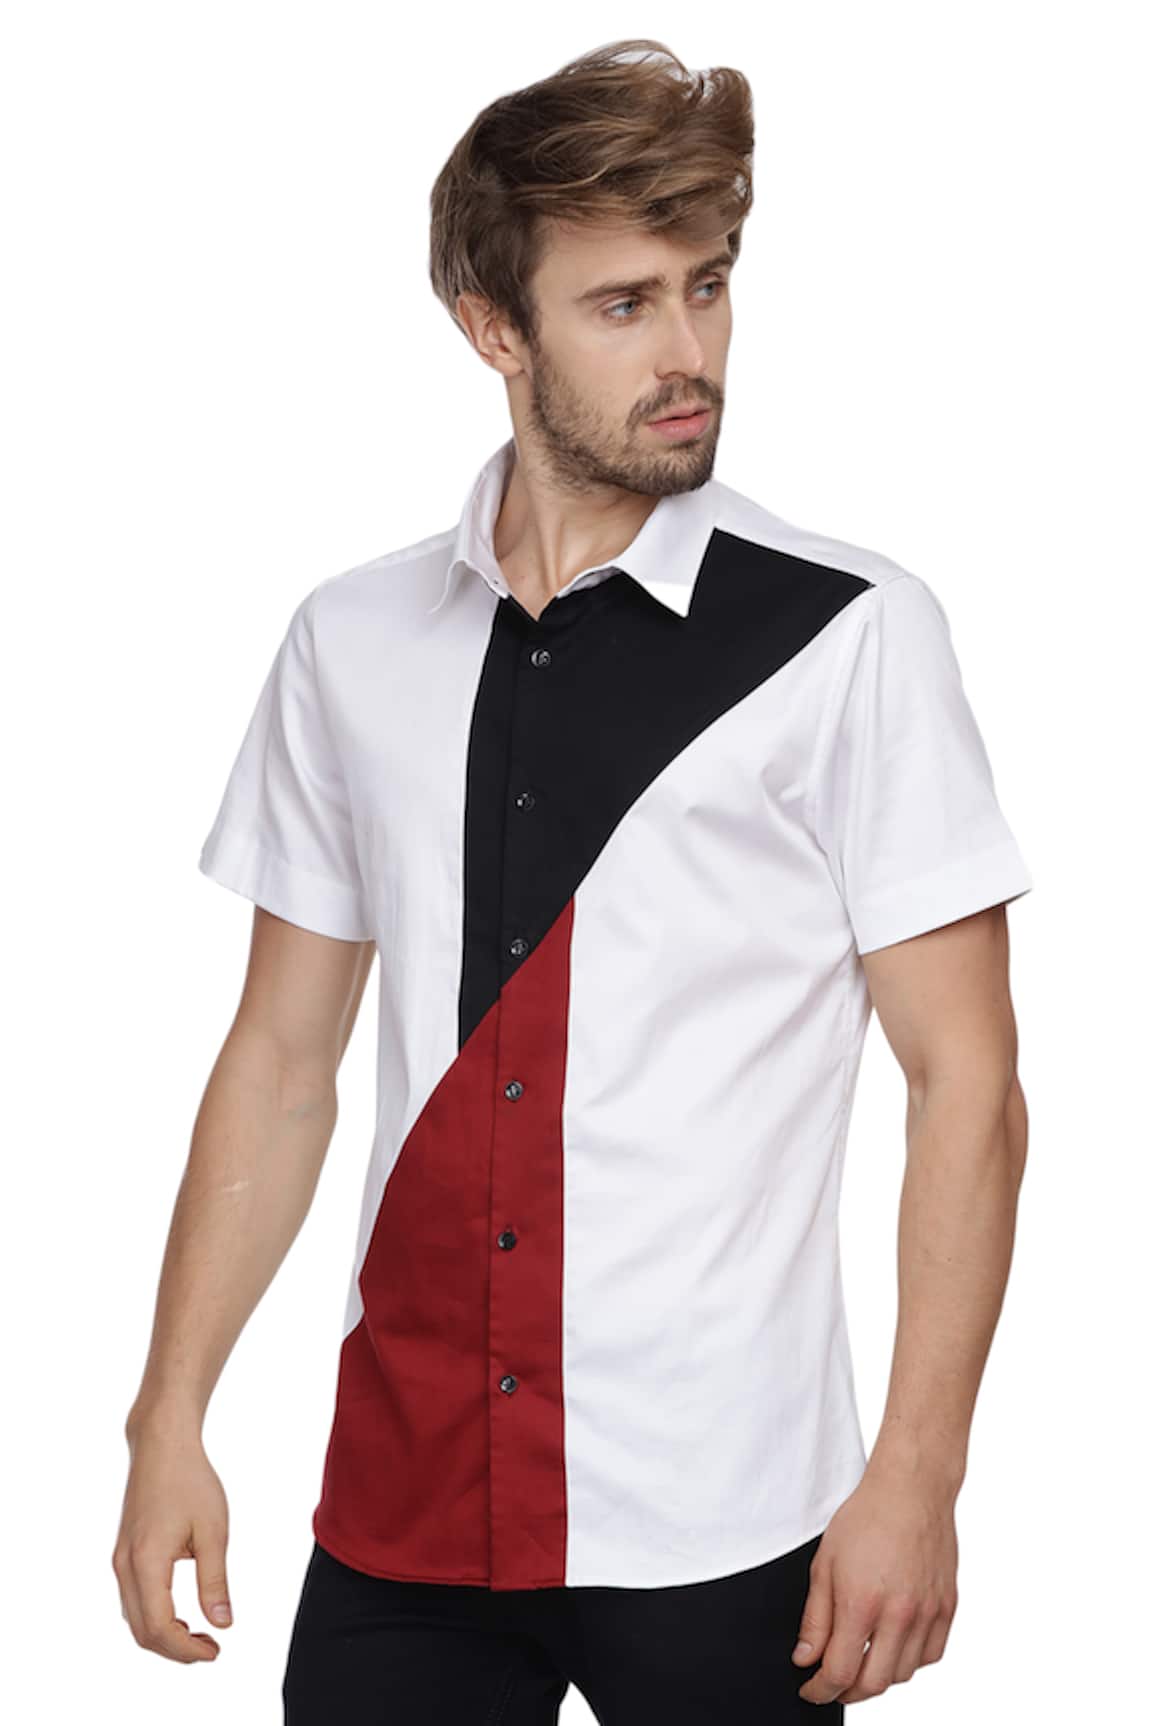 Abkasa Slim-Fit Colorblock Shirt